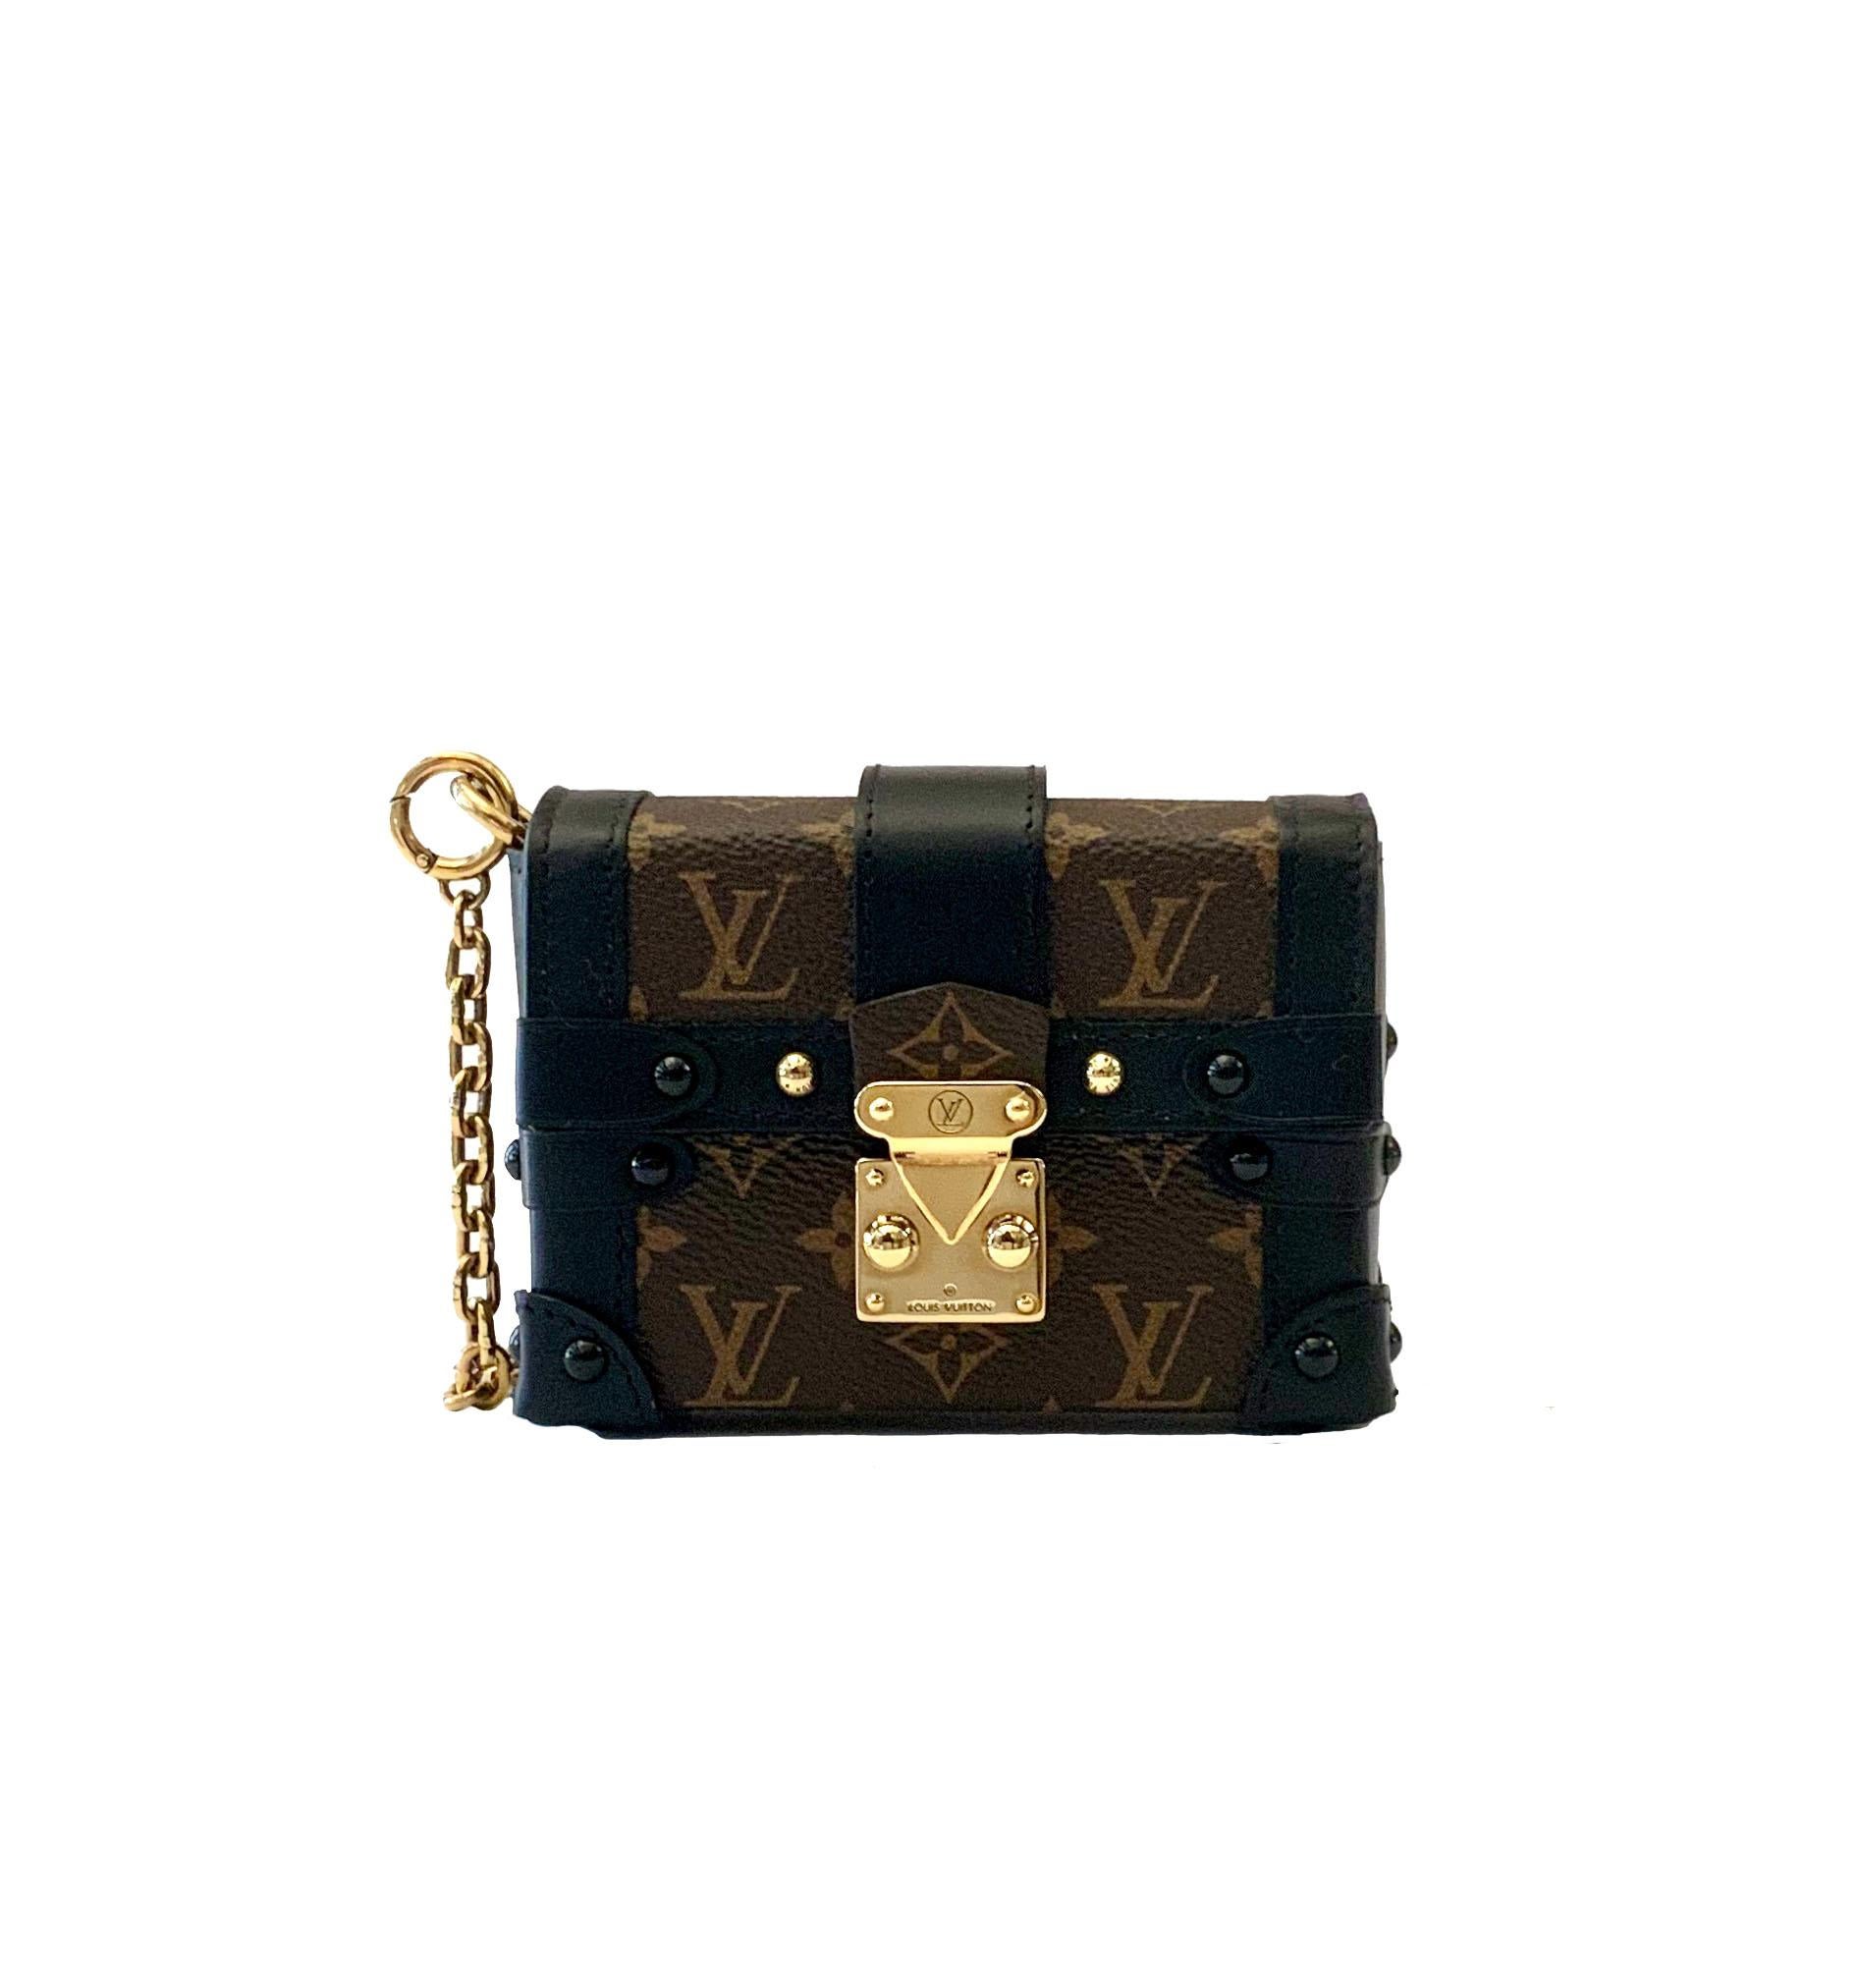 Louis Vuitton Essential Trunk Sale on | lv essential trunk, essential trunk lv, louis vuitton essential trunk bag